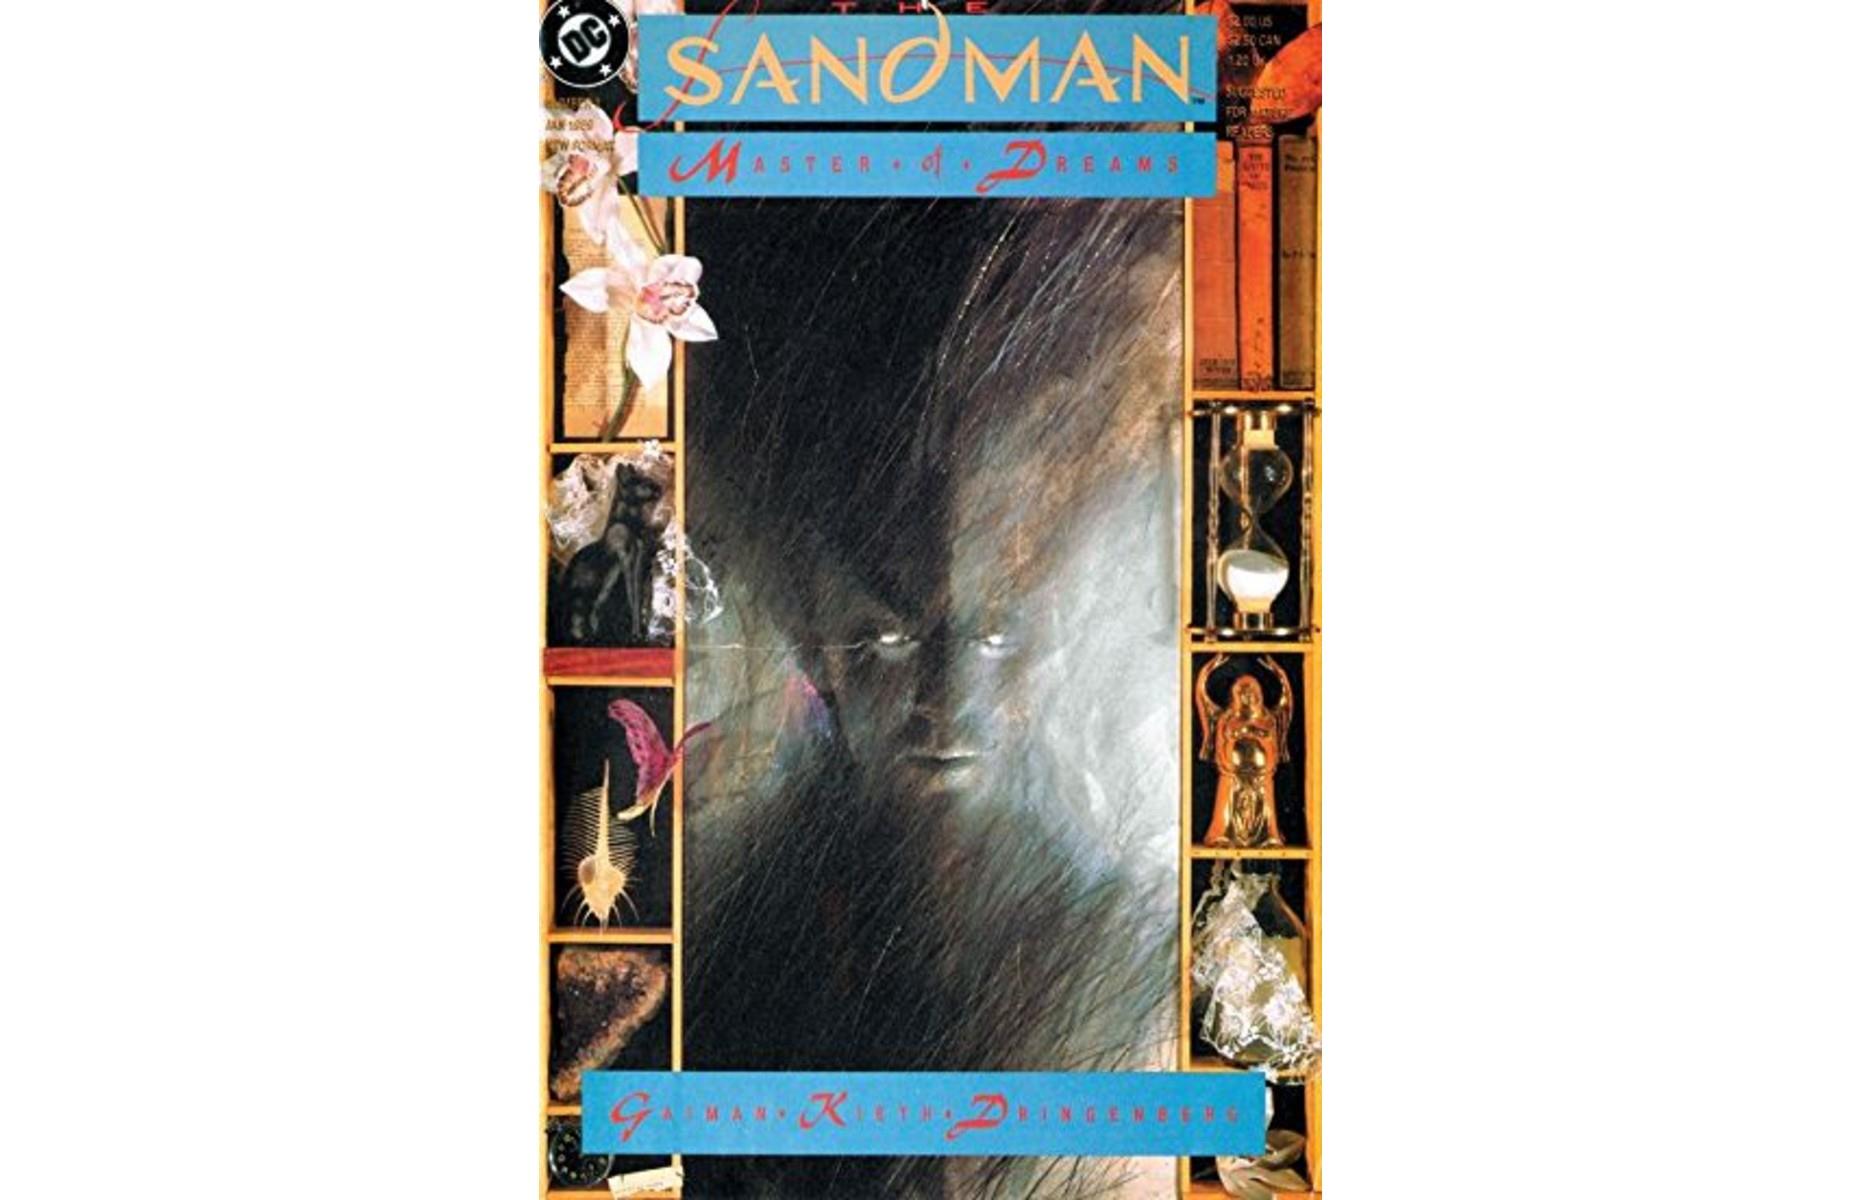 Sandman #1: up to £229 ($300)